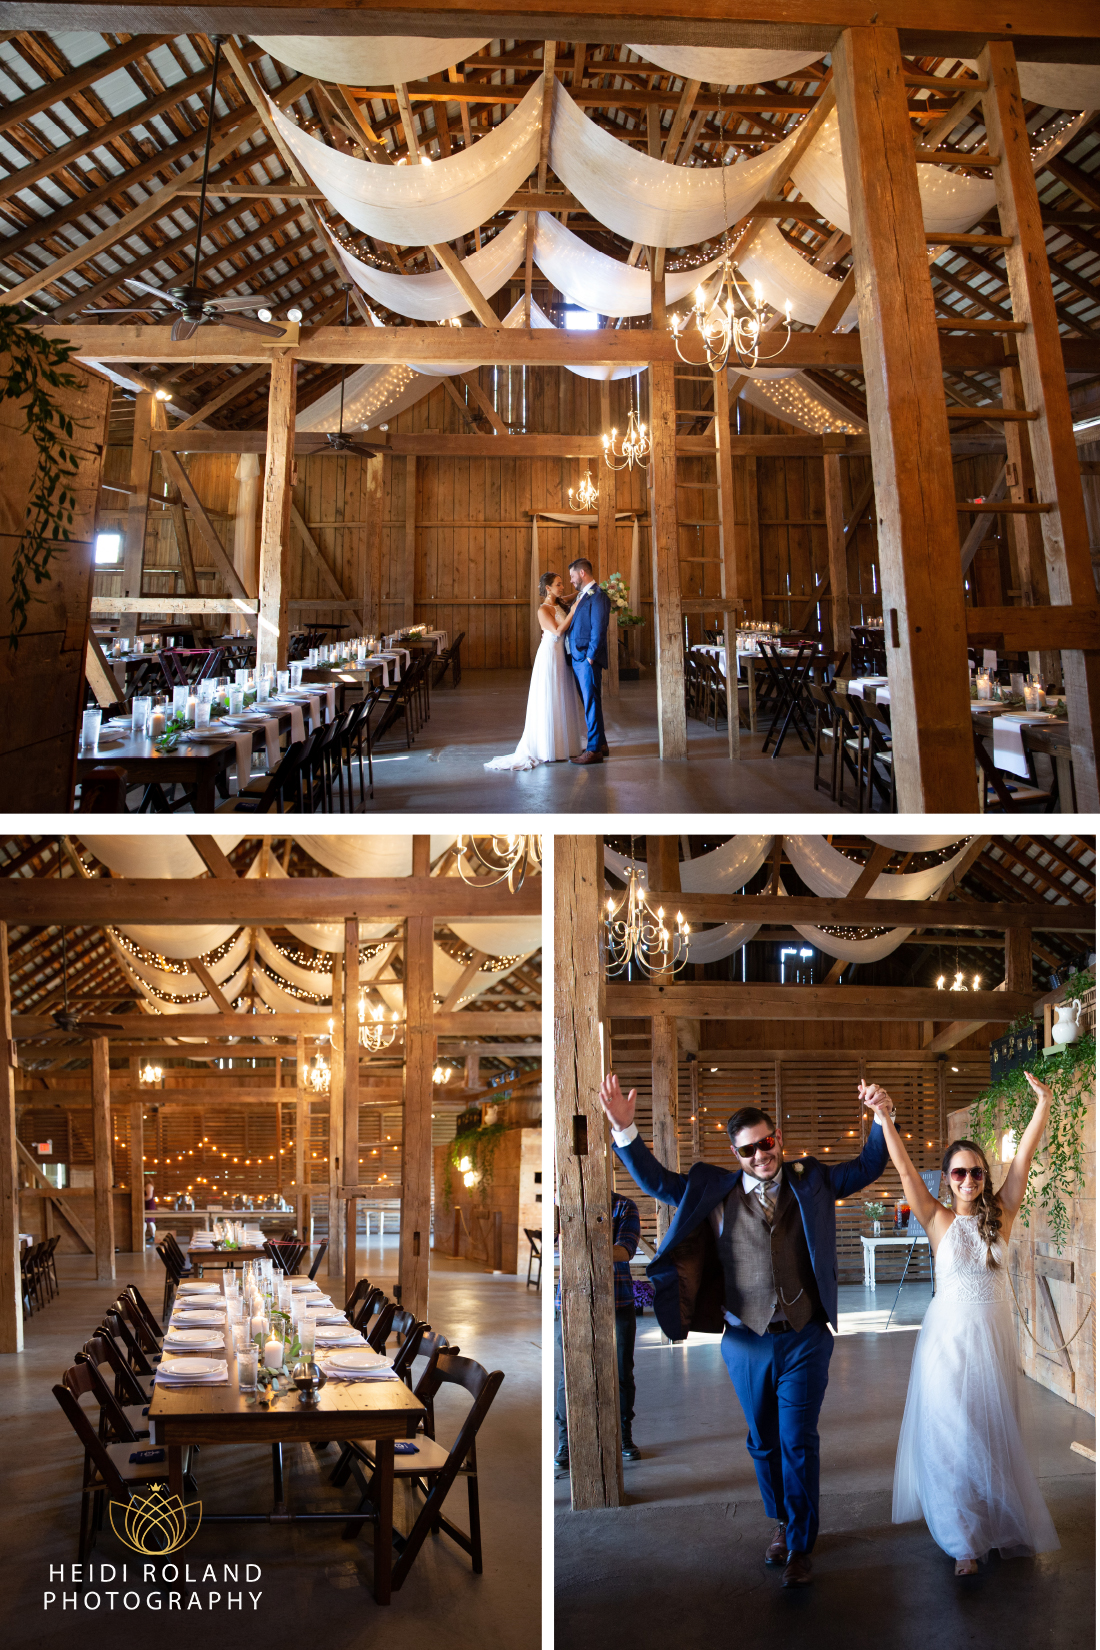 Stoltzfus Homestead wedding reception barn with bride and groom